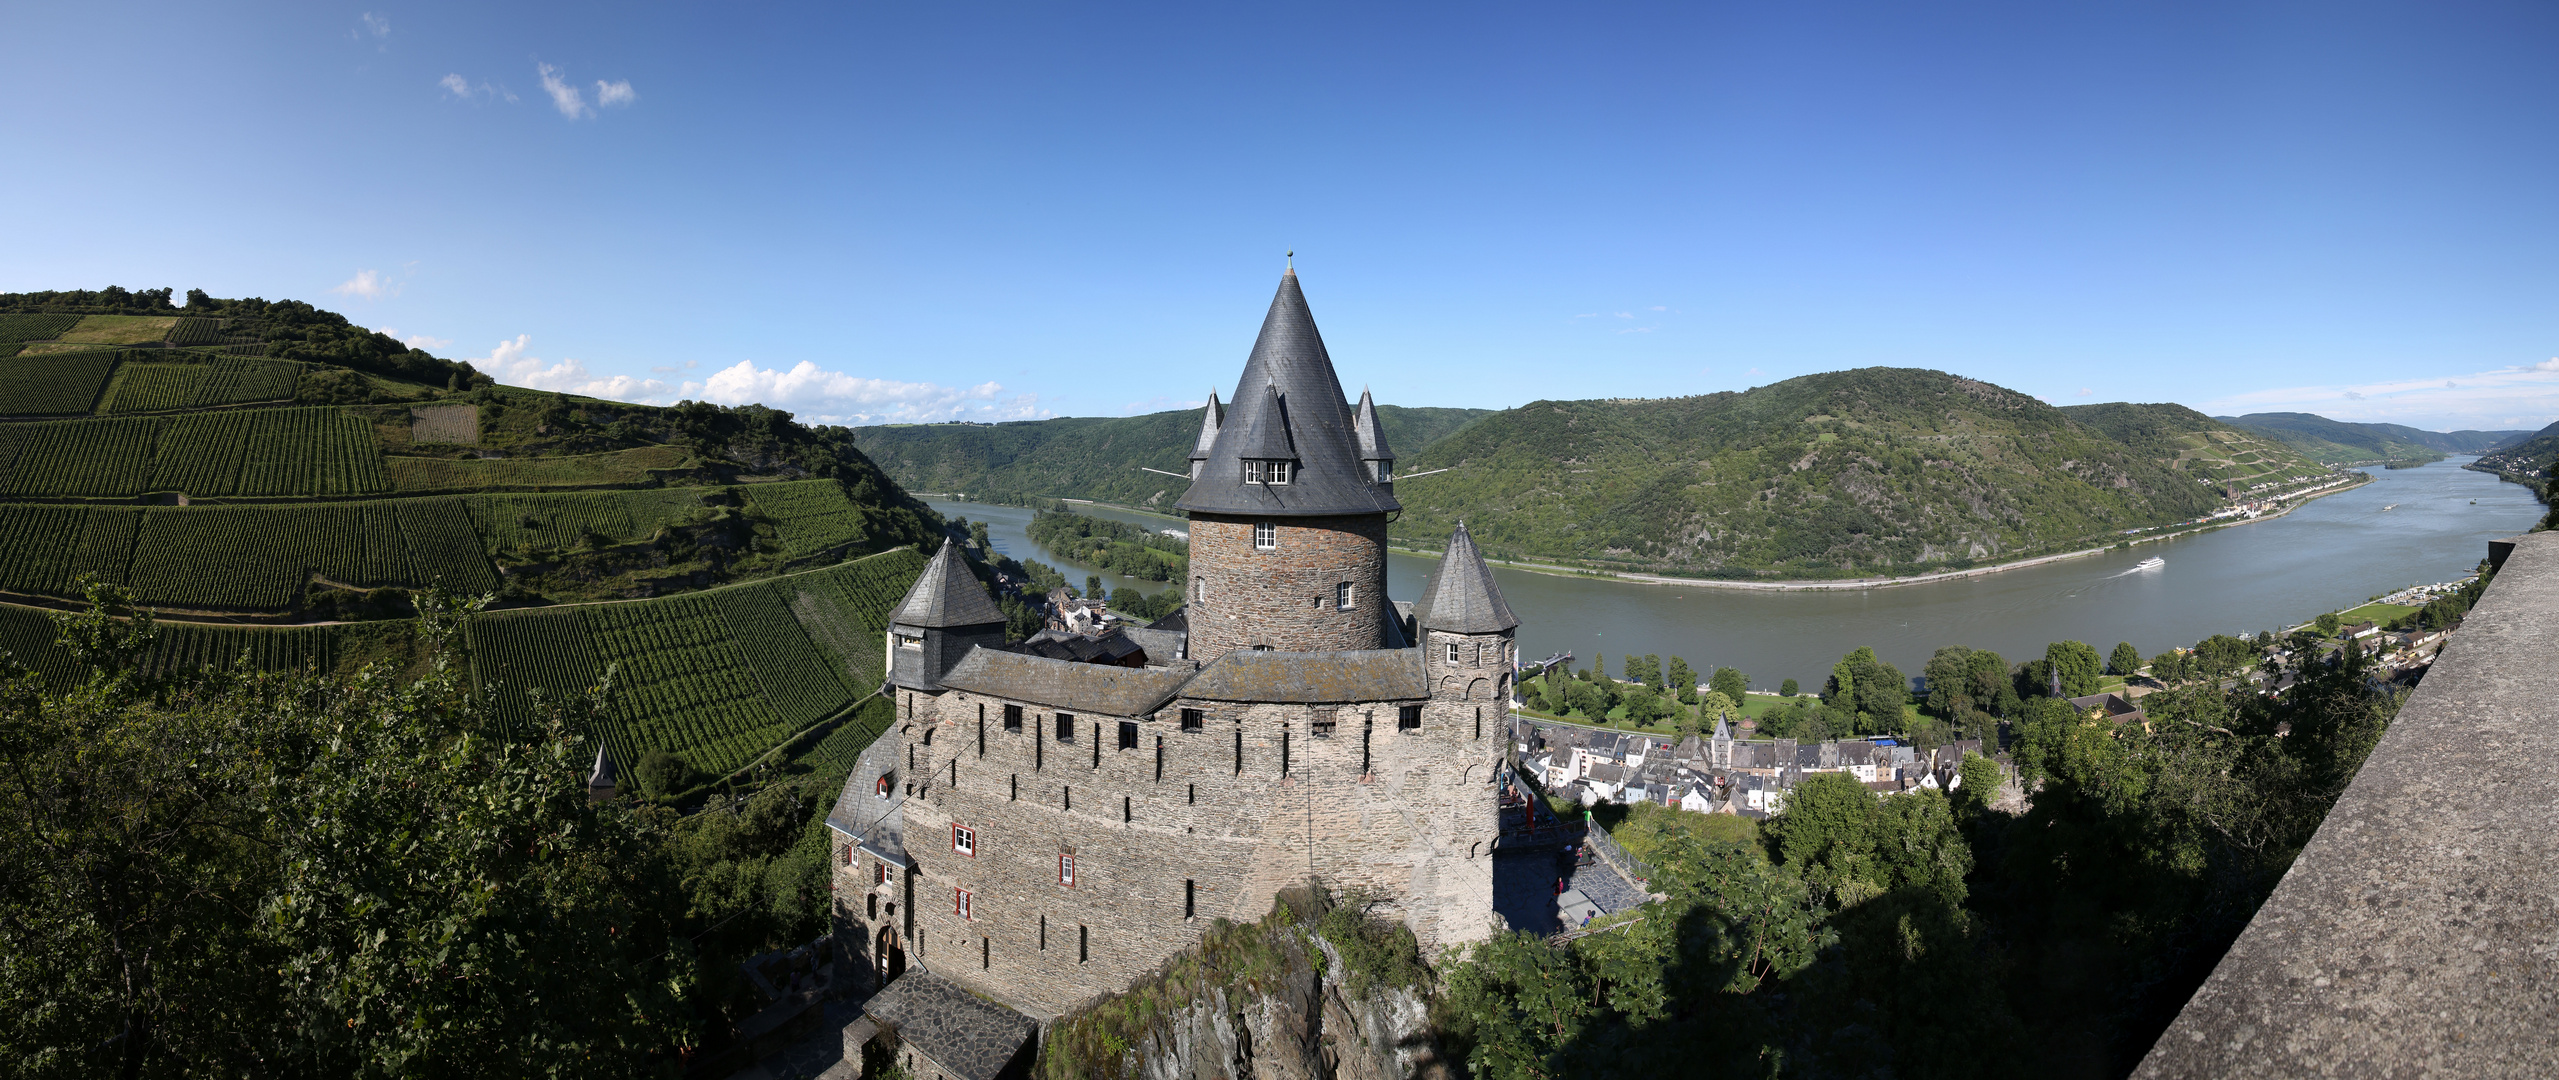 Jugendherberge Burg Bacharach